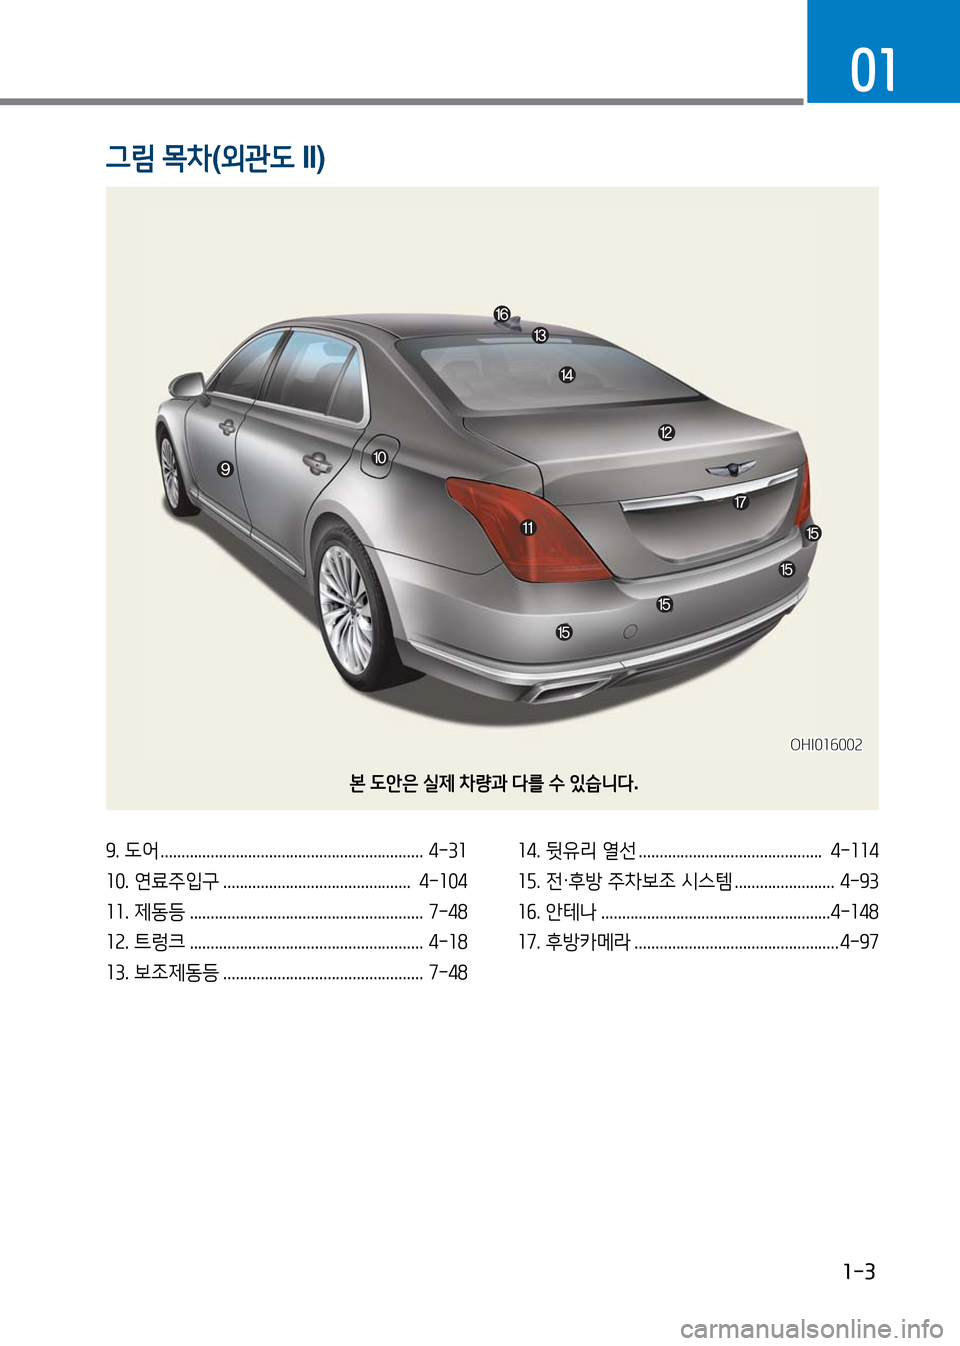 Hyundai Genesis 2016  EQ900 HI - 사용 설명서 (in Korean) 1-3
01
9. 도어 ............................................................... 4-31
10. 연료주입구 .............................................  4-104
11. 제동등 ...........................